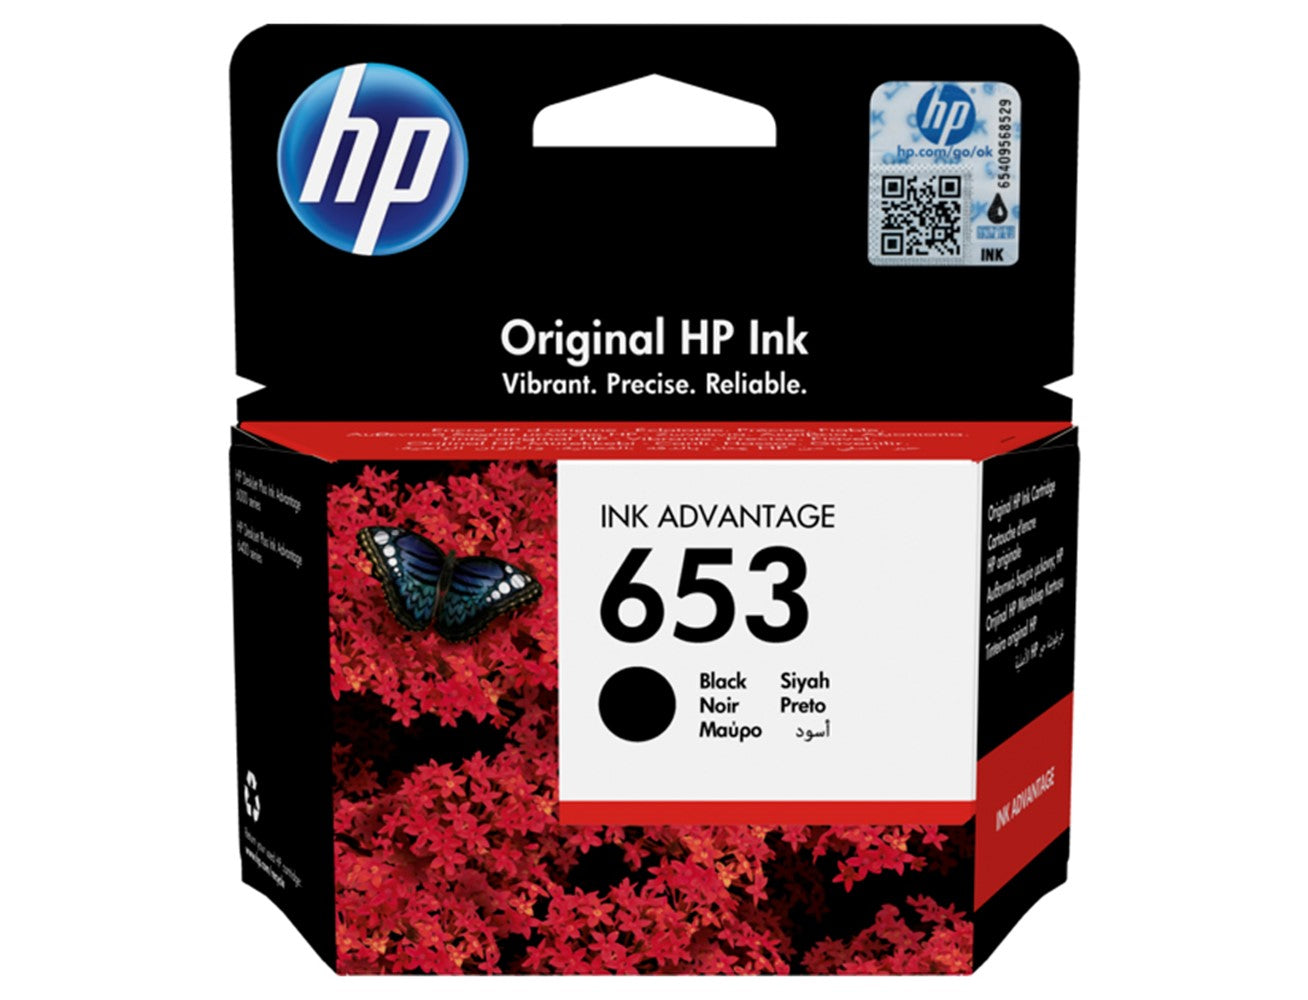 HP 653 Original Ink Cartridge - Black